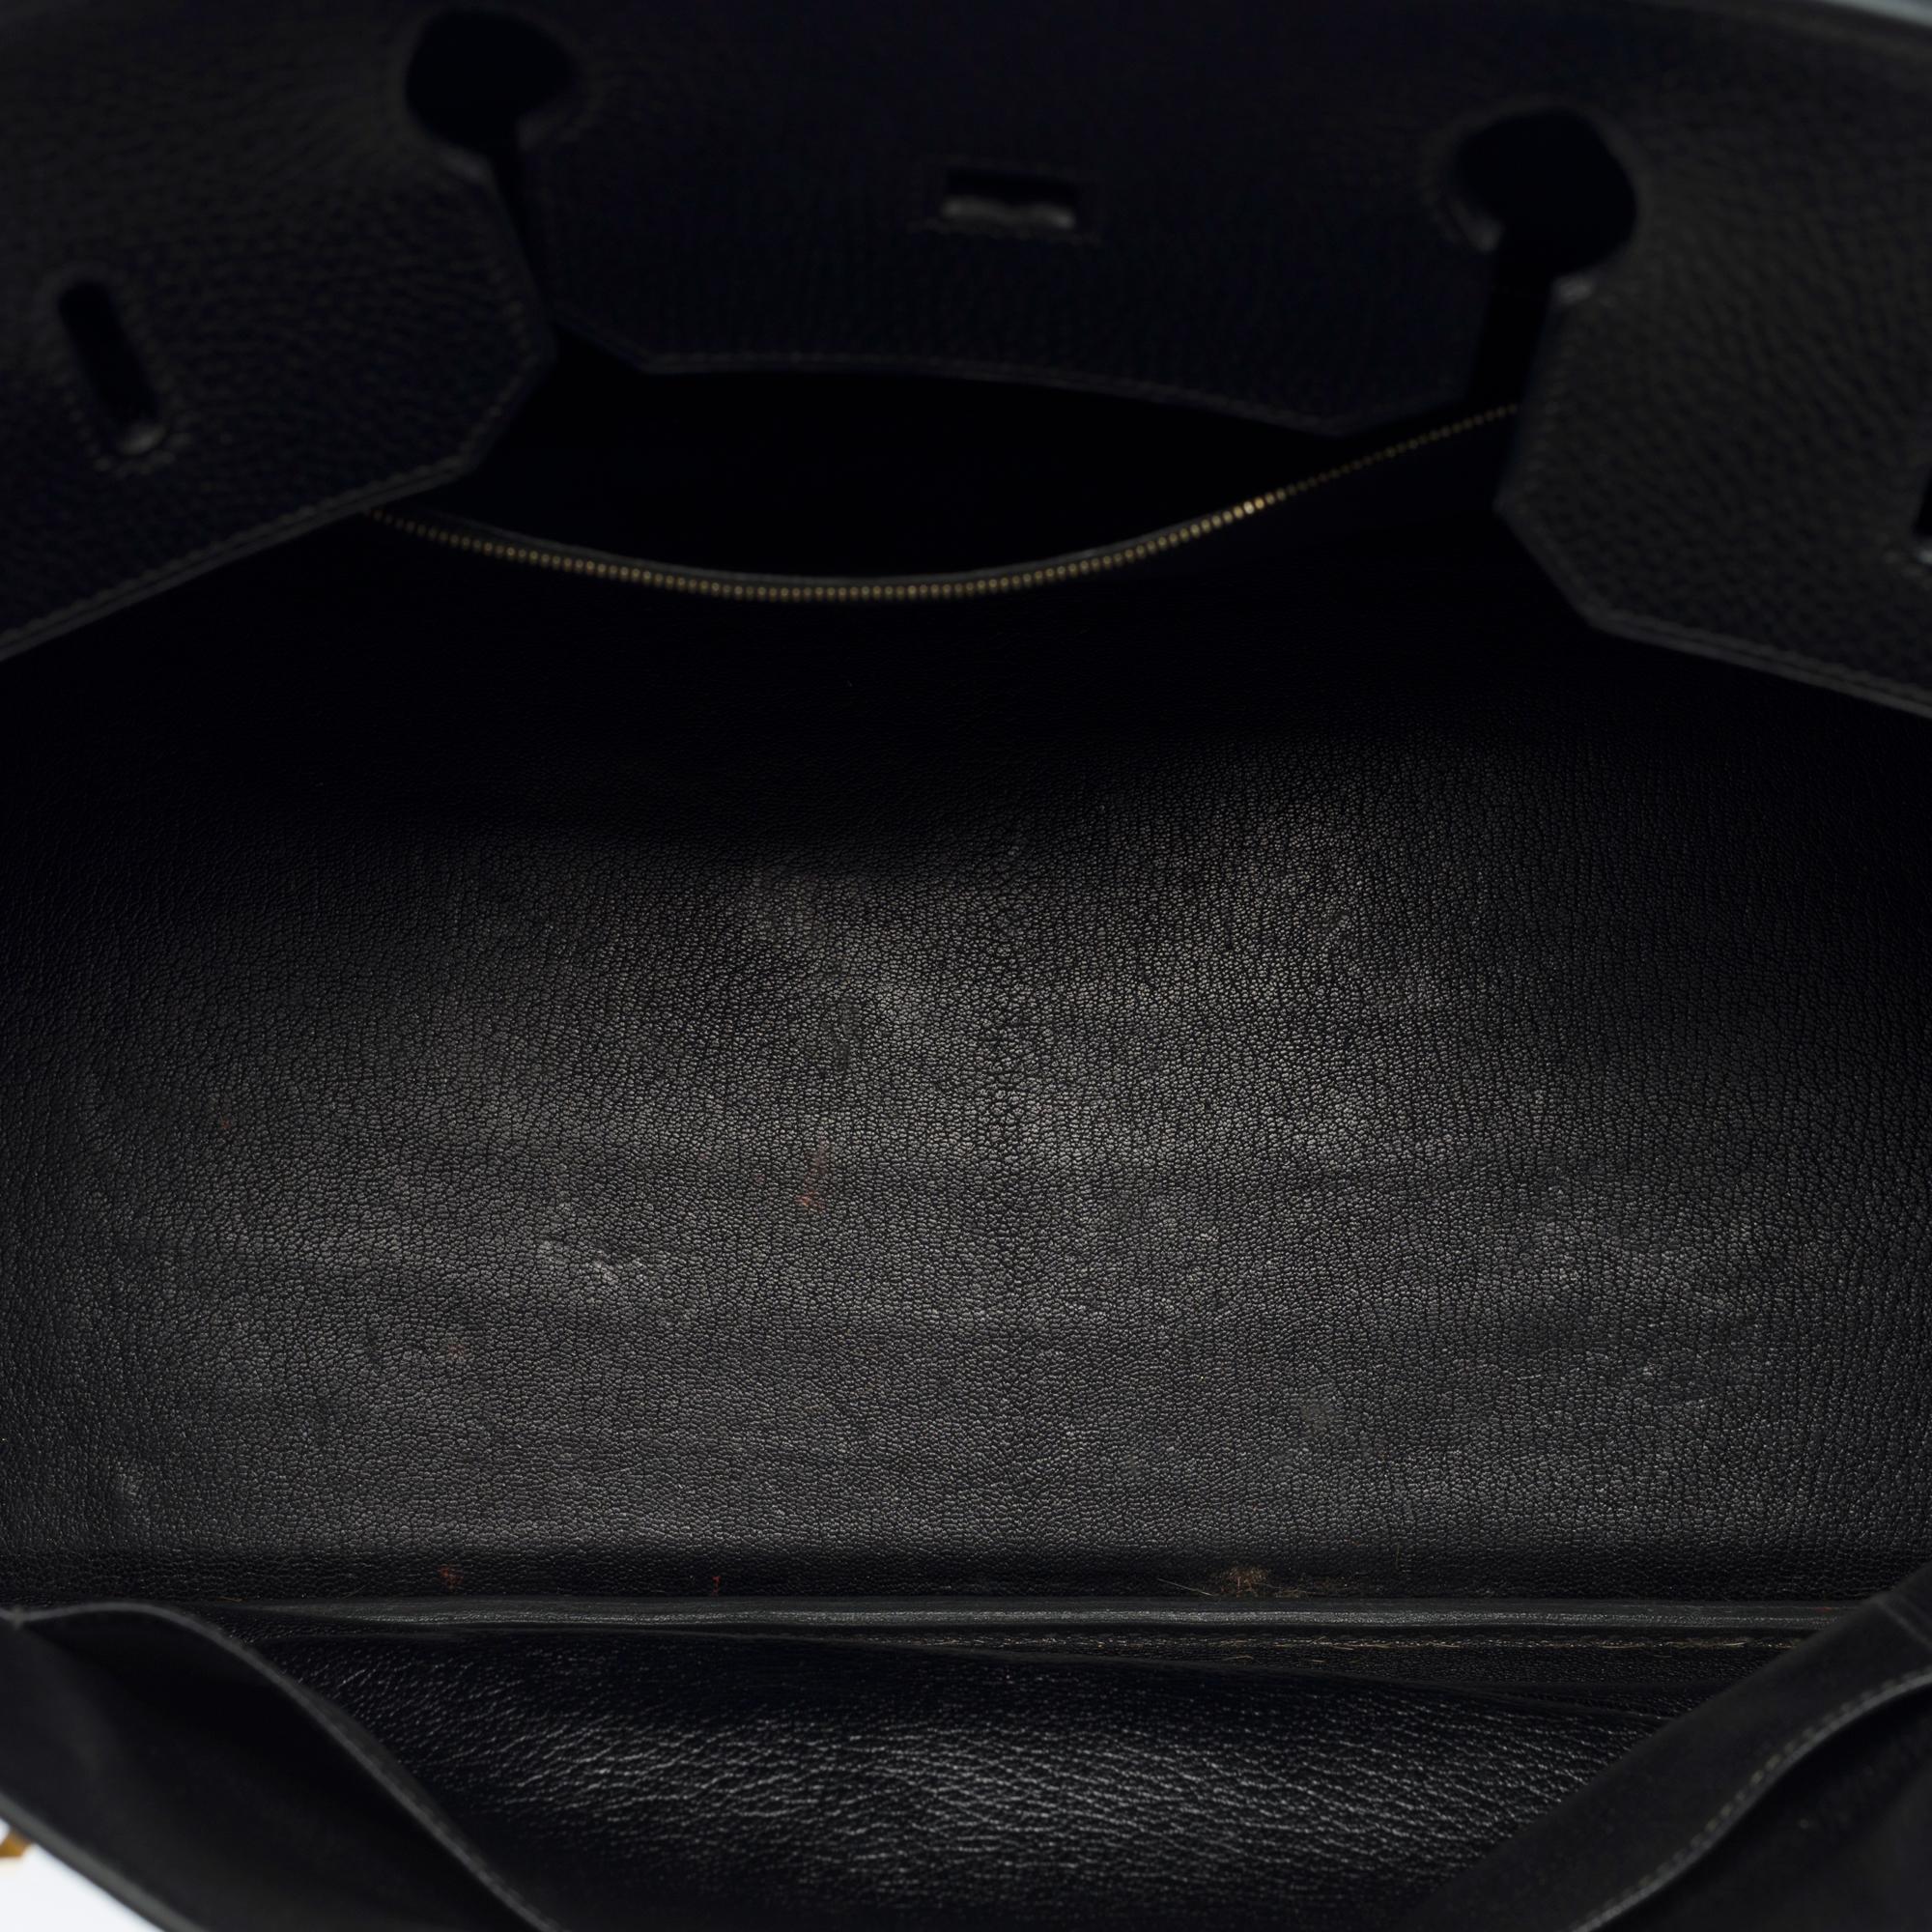 Classy Hermes Birkin 40cm handbag in Black Fjord leather, GHW 3